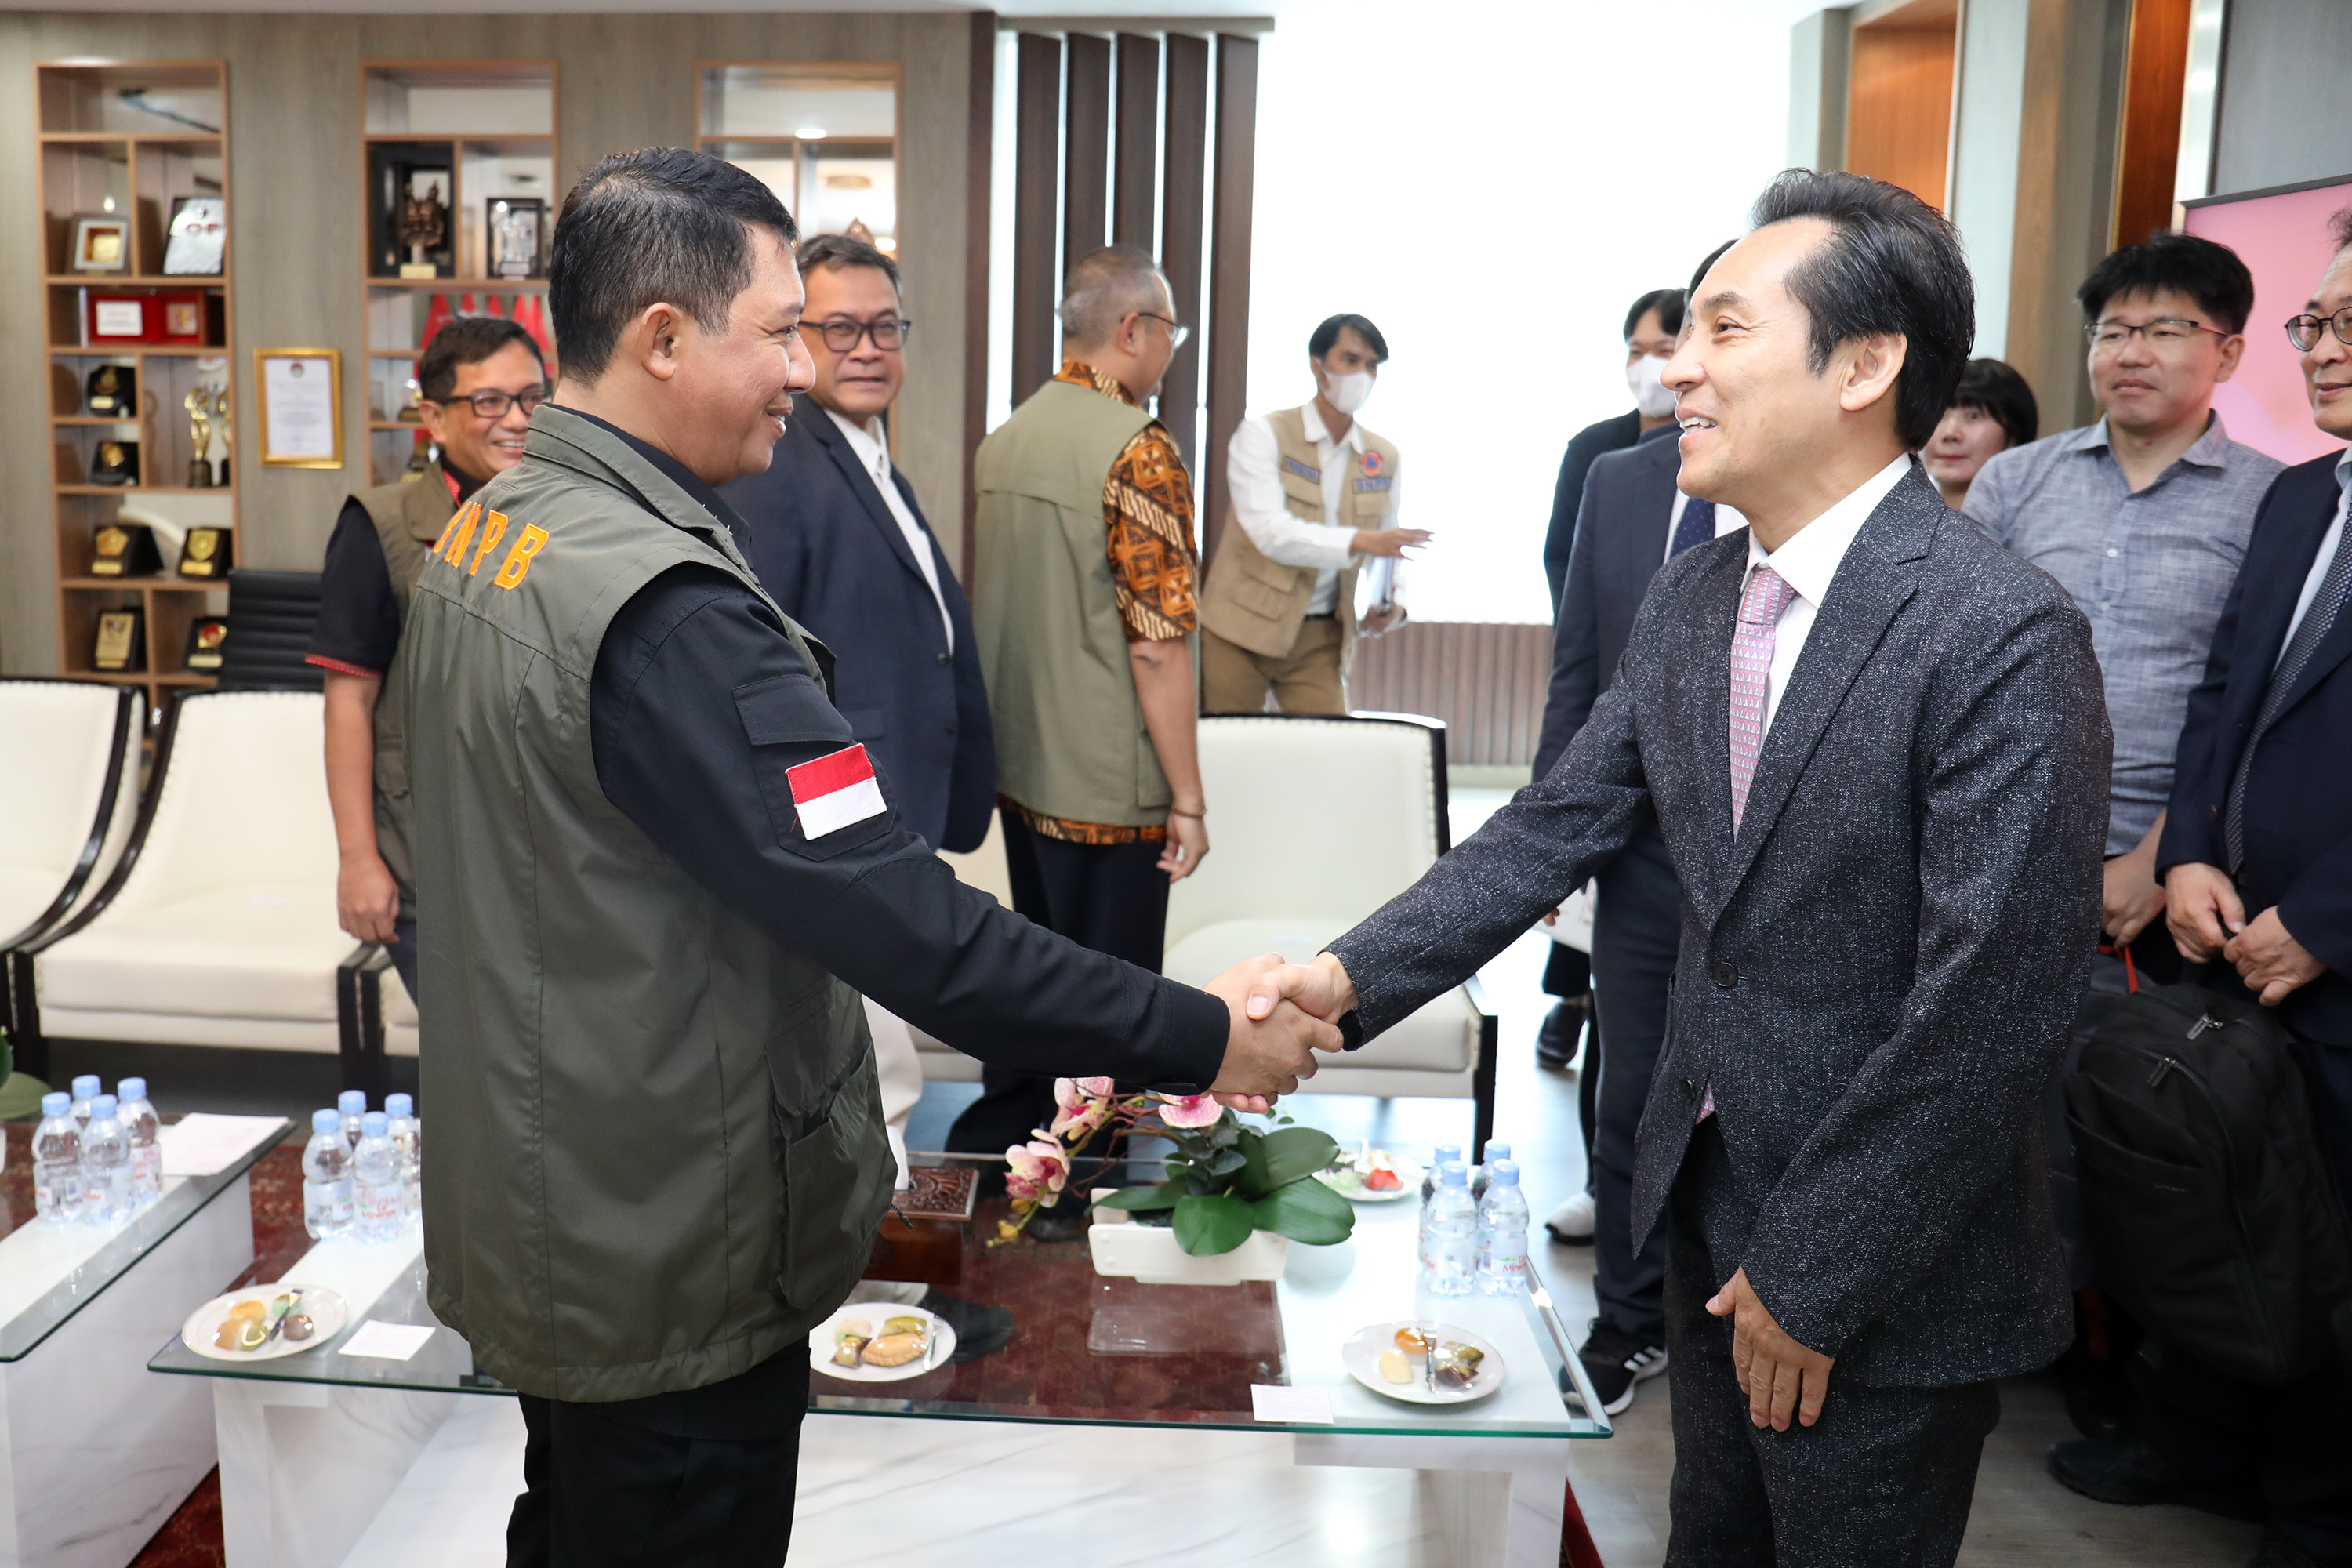 Kepala BNPB Letjen TNI Suharyanto S,Sos., M.M., (kiri) menerima kehadiran Presiden KISTI Kim Jaesoo di Graha BNPB, Jakarta, Rabu (31/5).